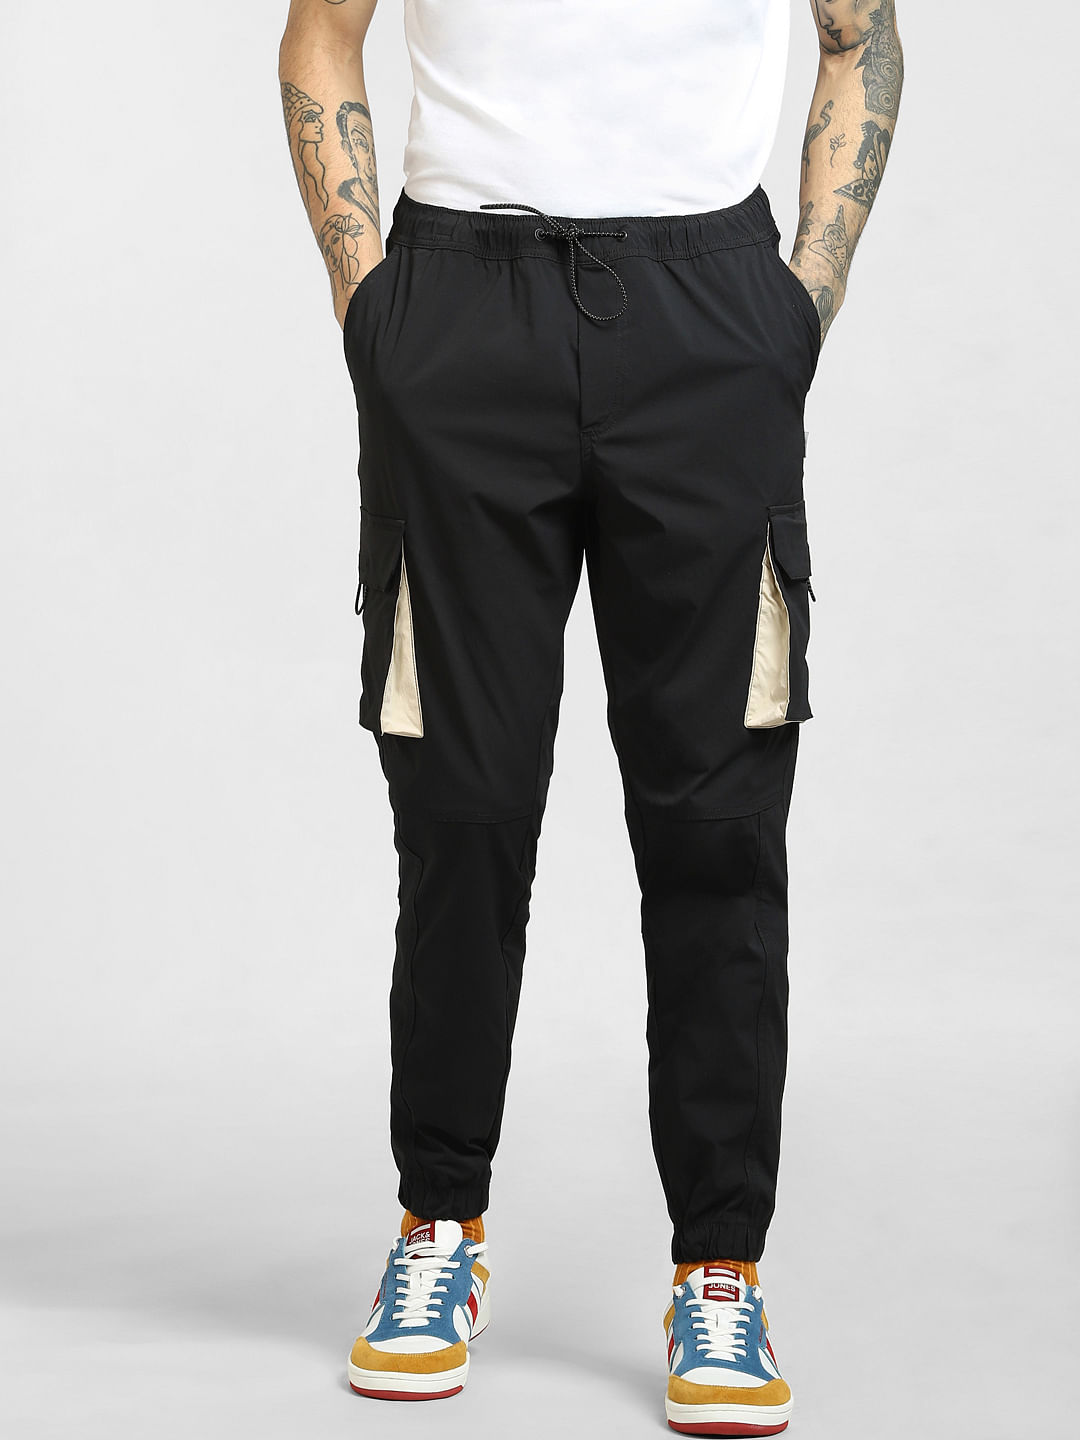 Buy Black Trousers  Pants for Men by Jack  Jones Online  Ajiocom